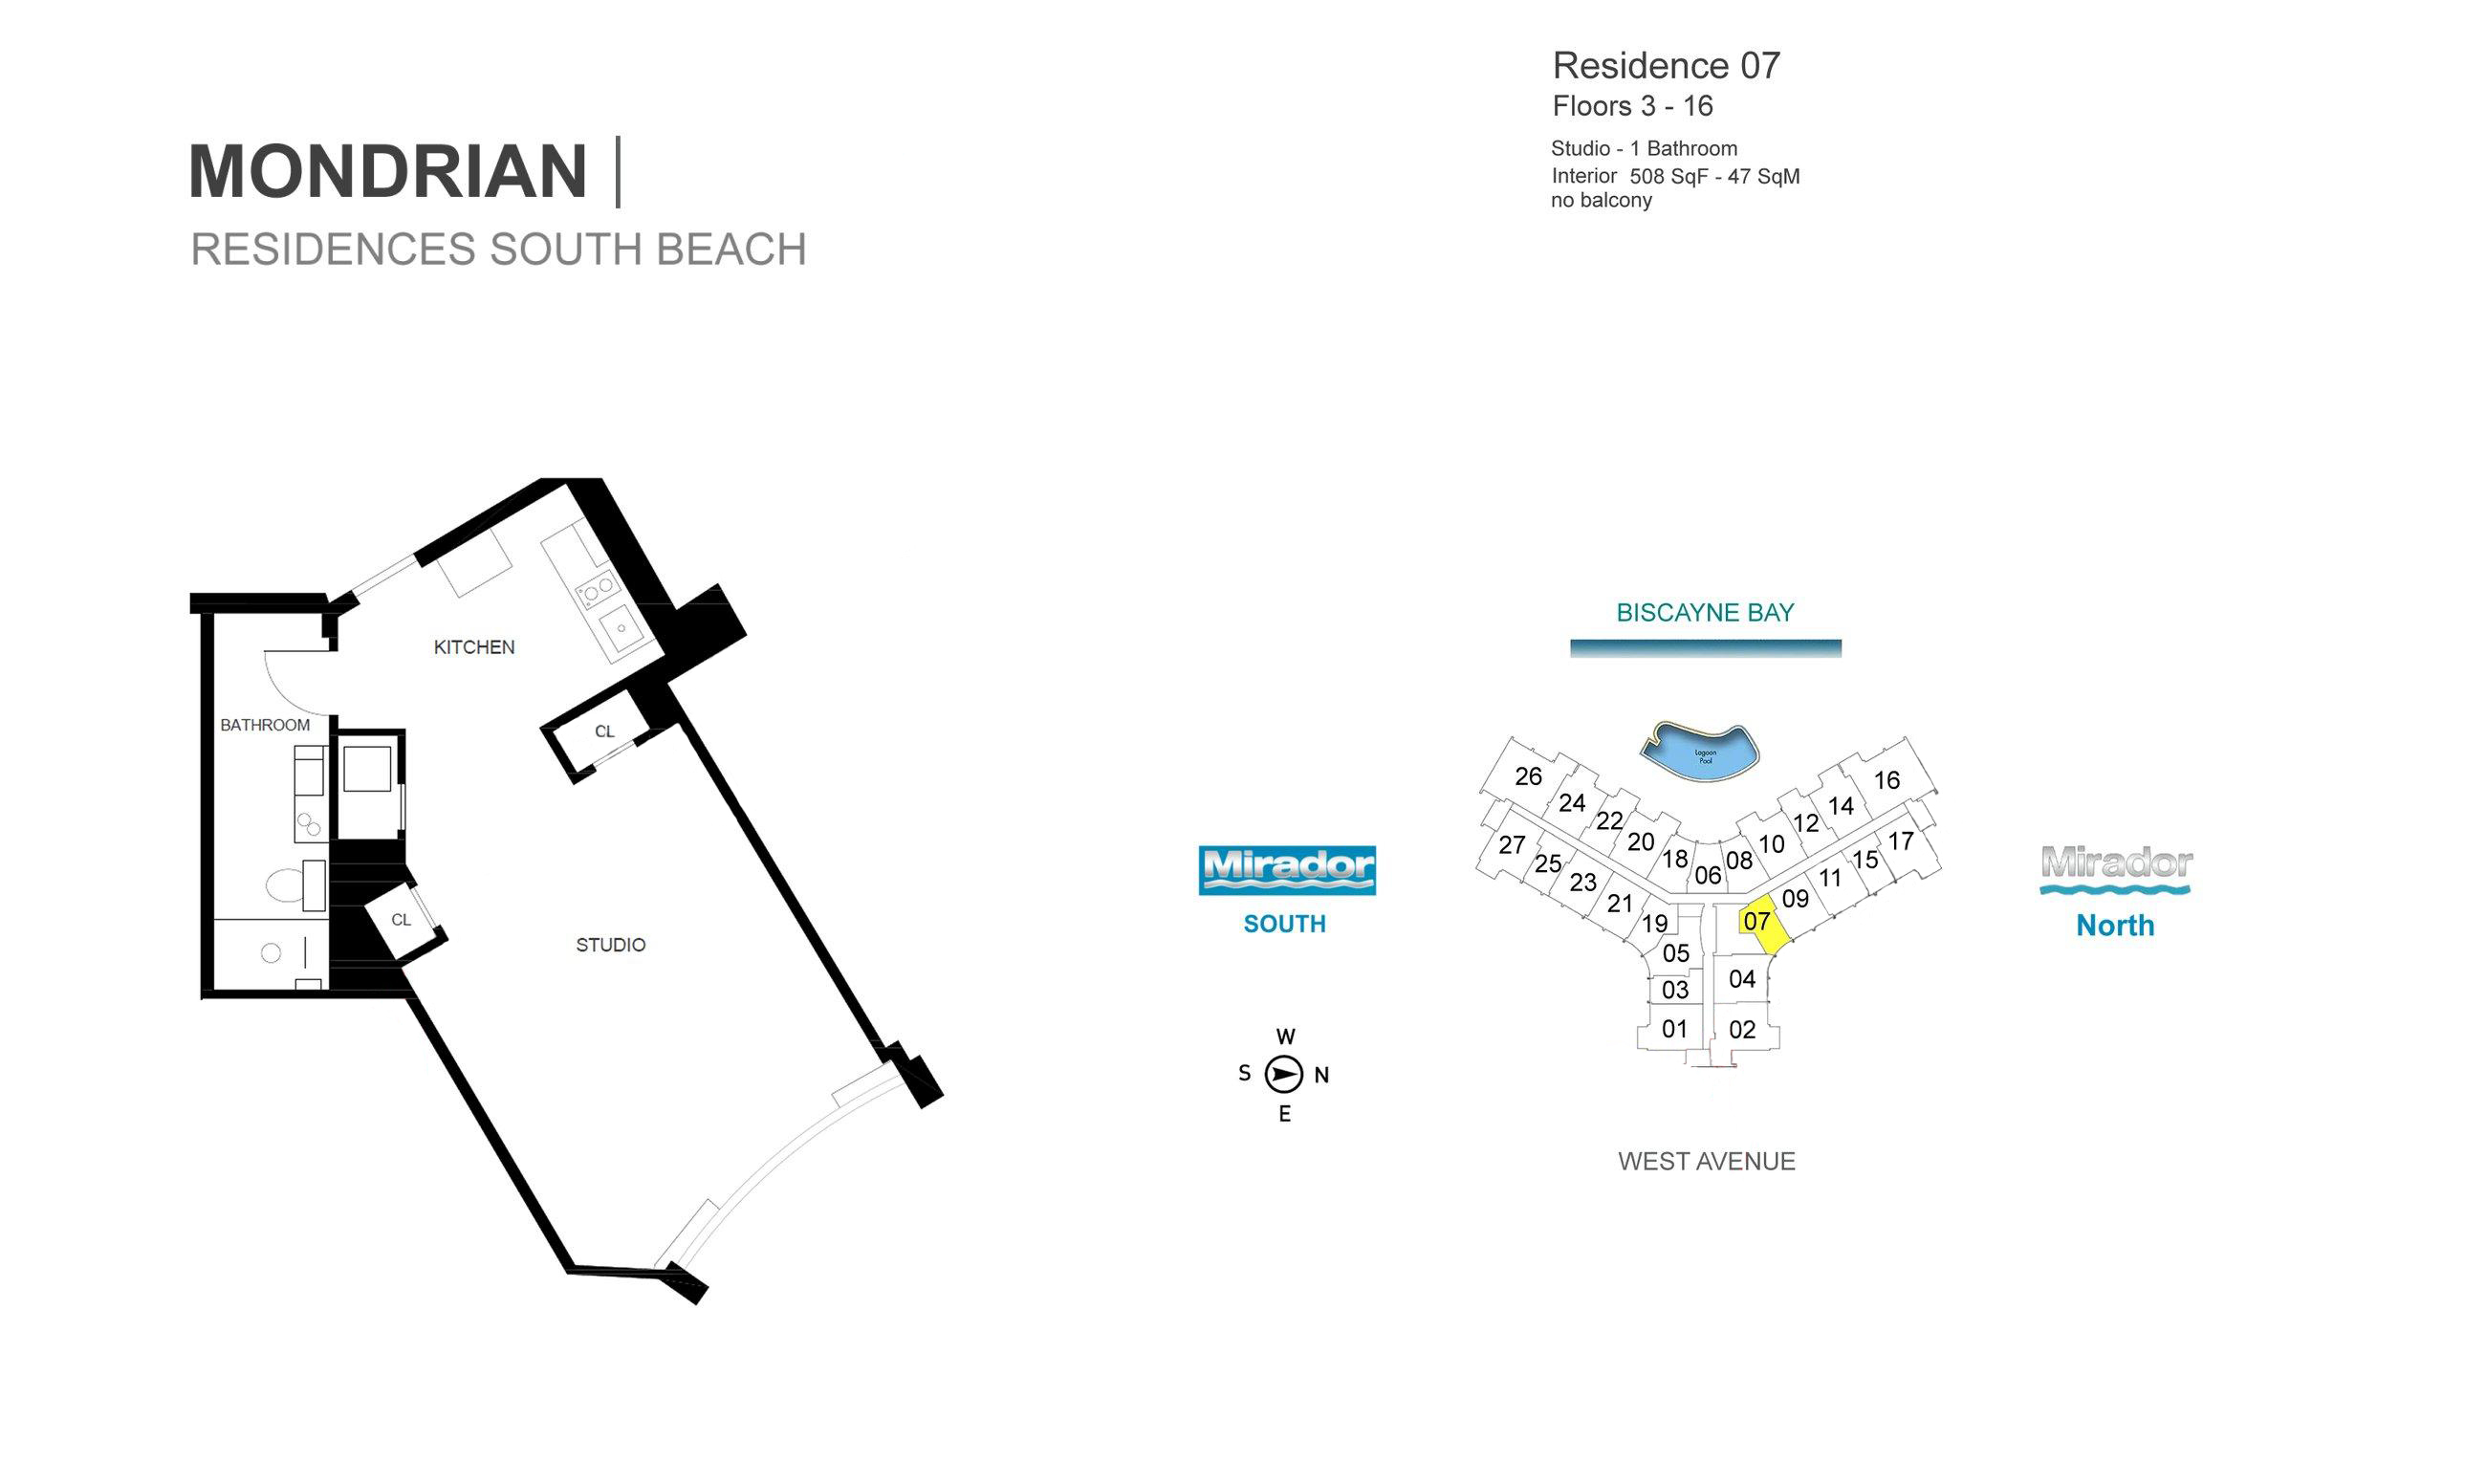 Mondrian South Beach Residence 07